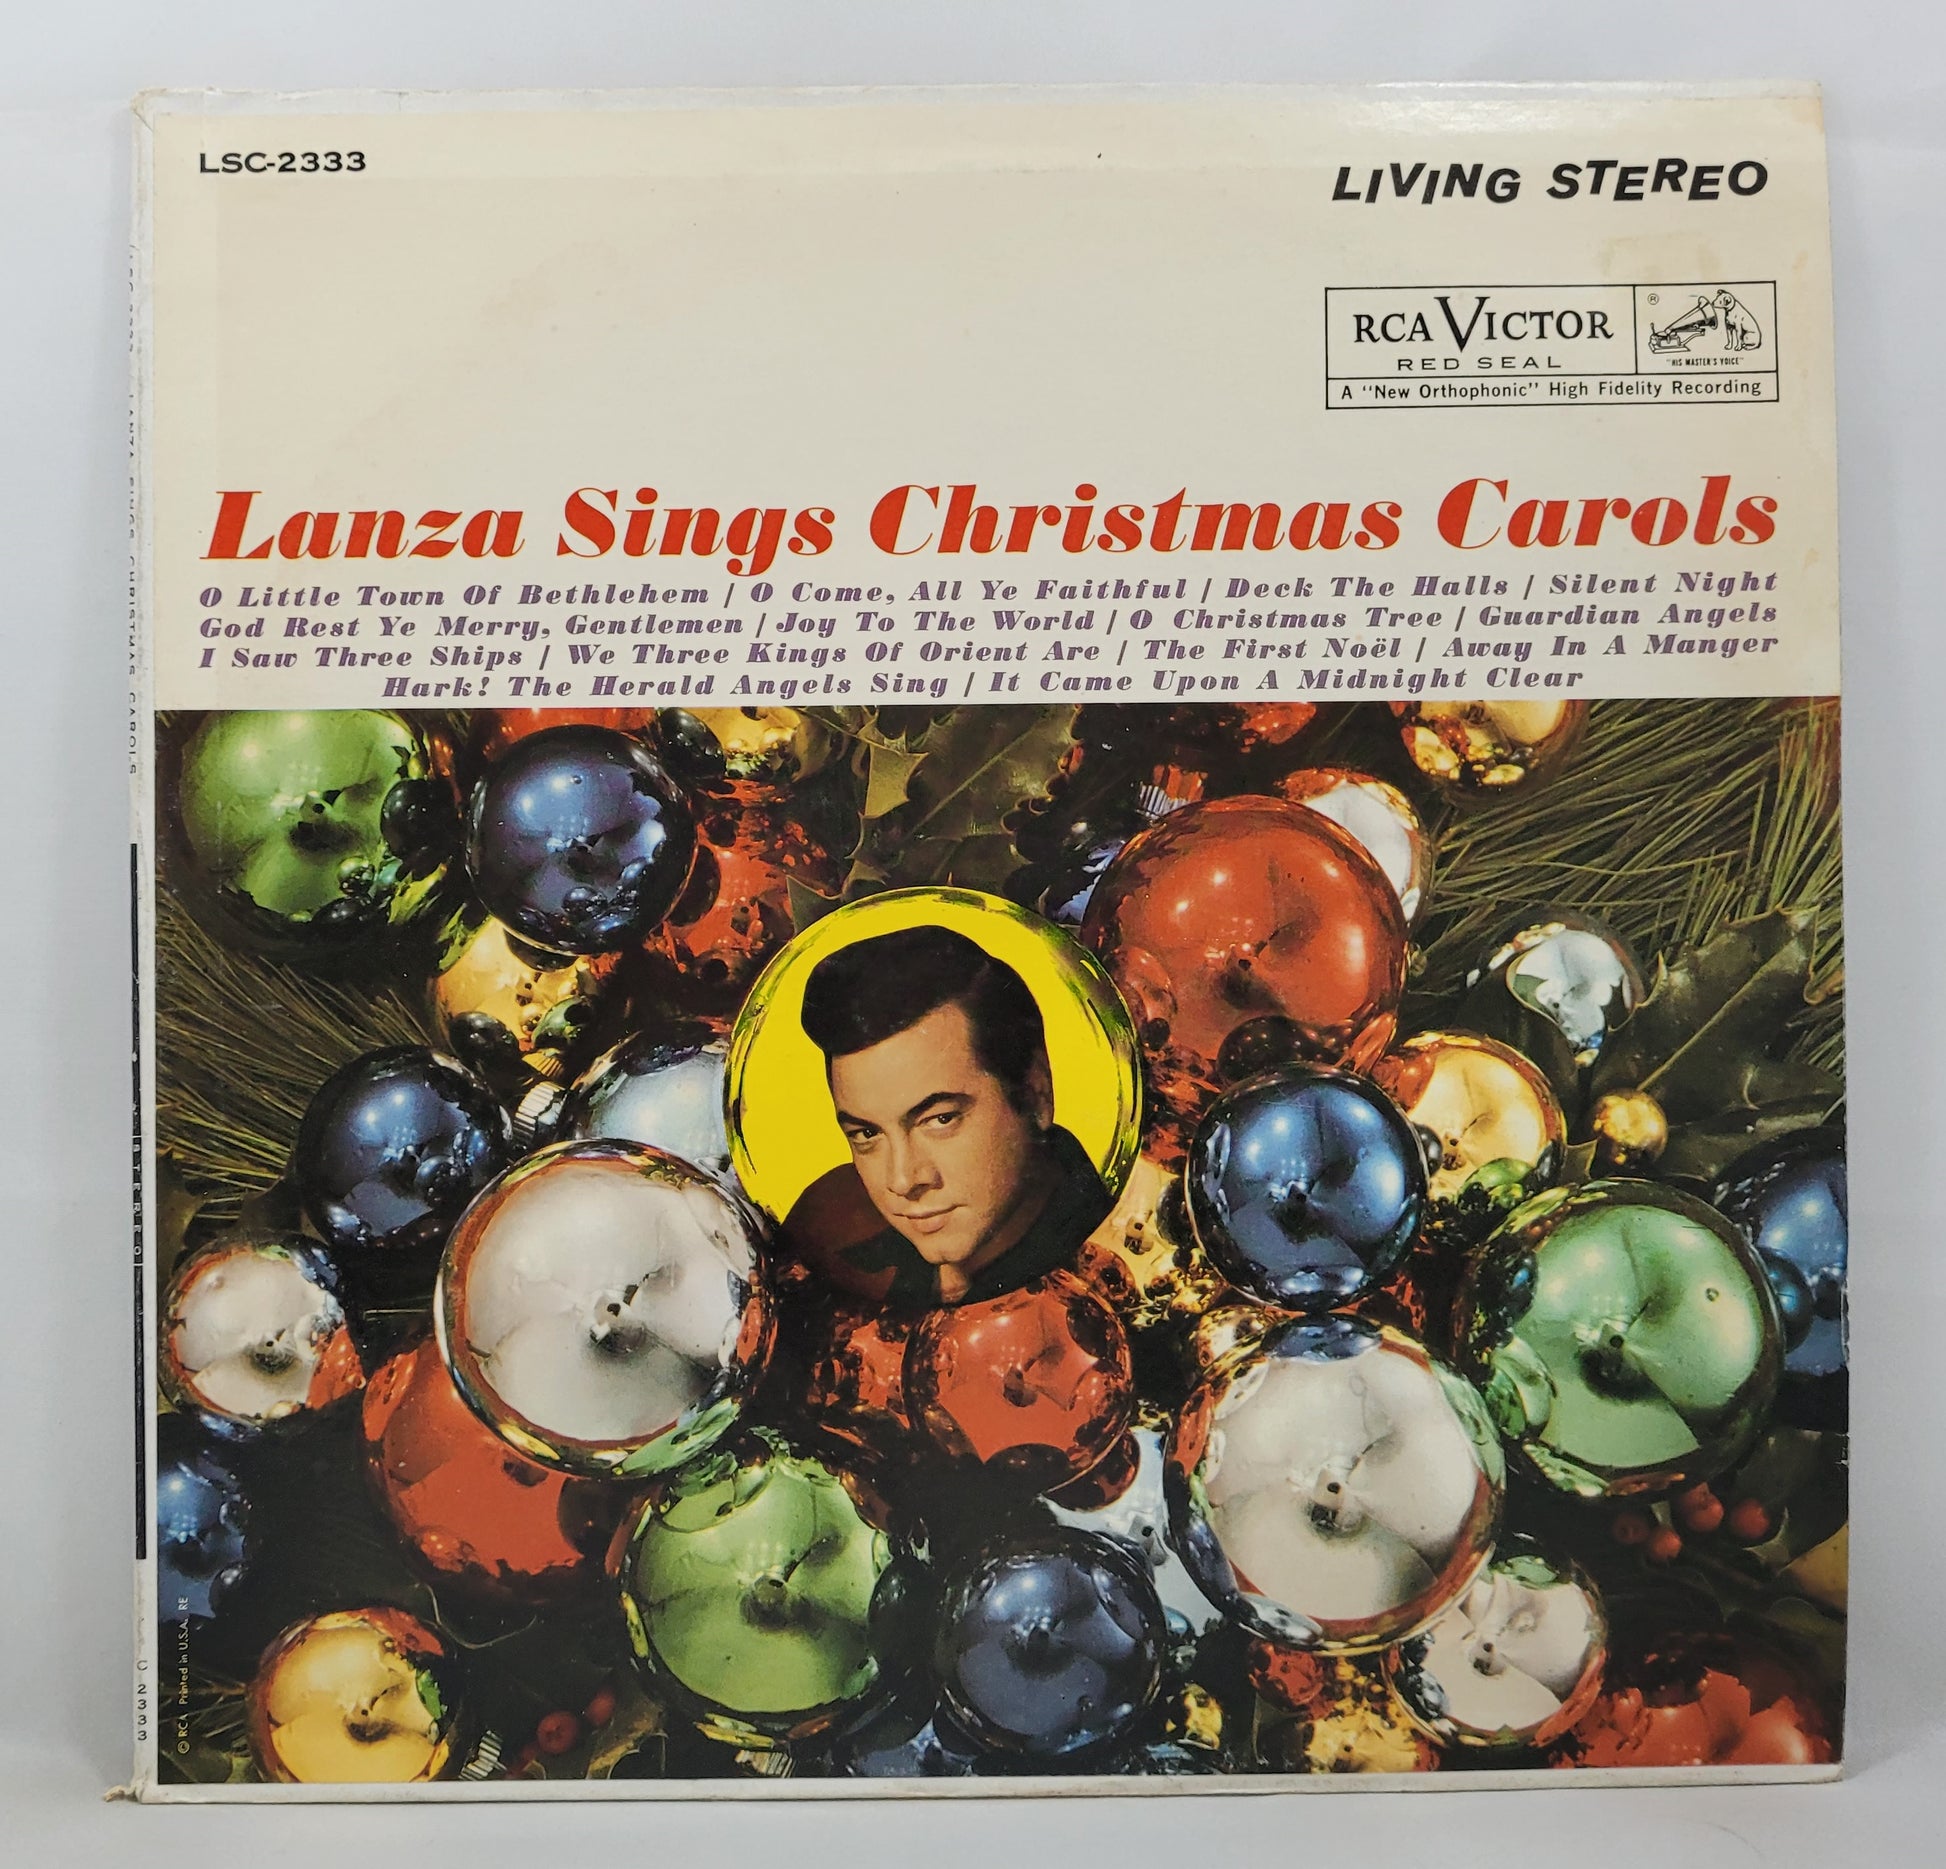 Mario Lanza - Lanza Sings Christmas Carols [Reissue] [Used Vinyl Record LP]